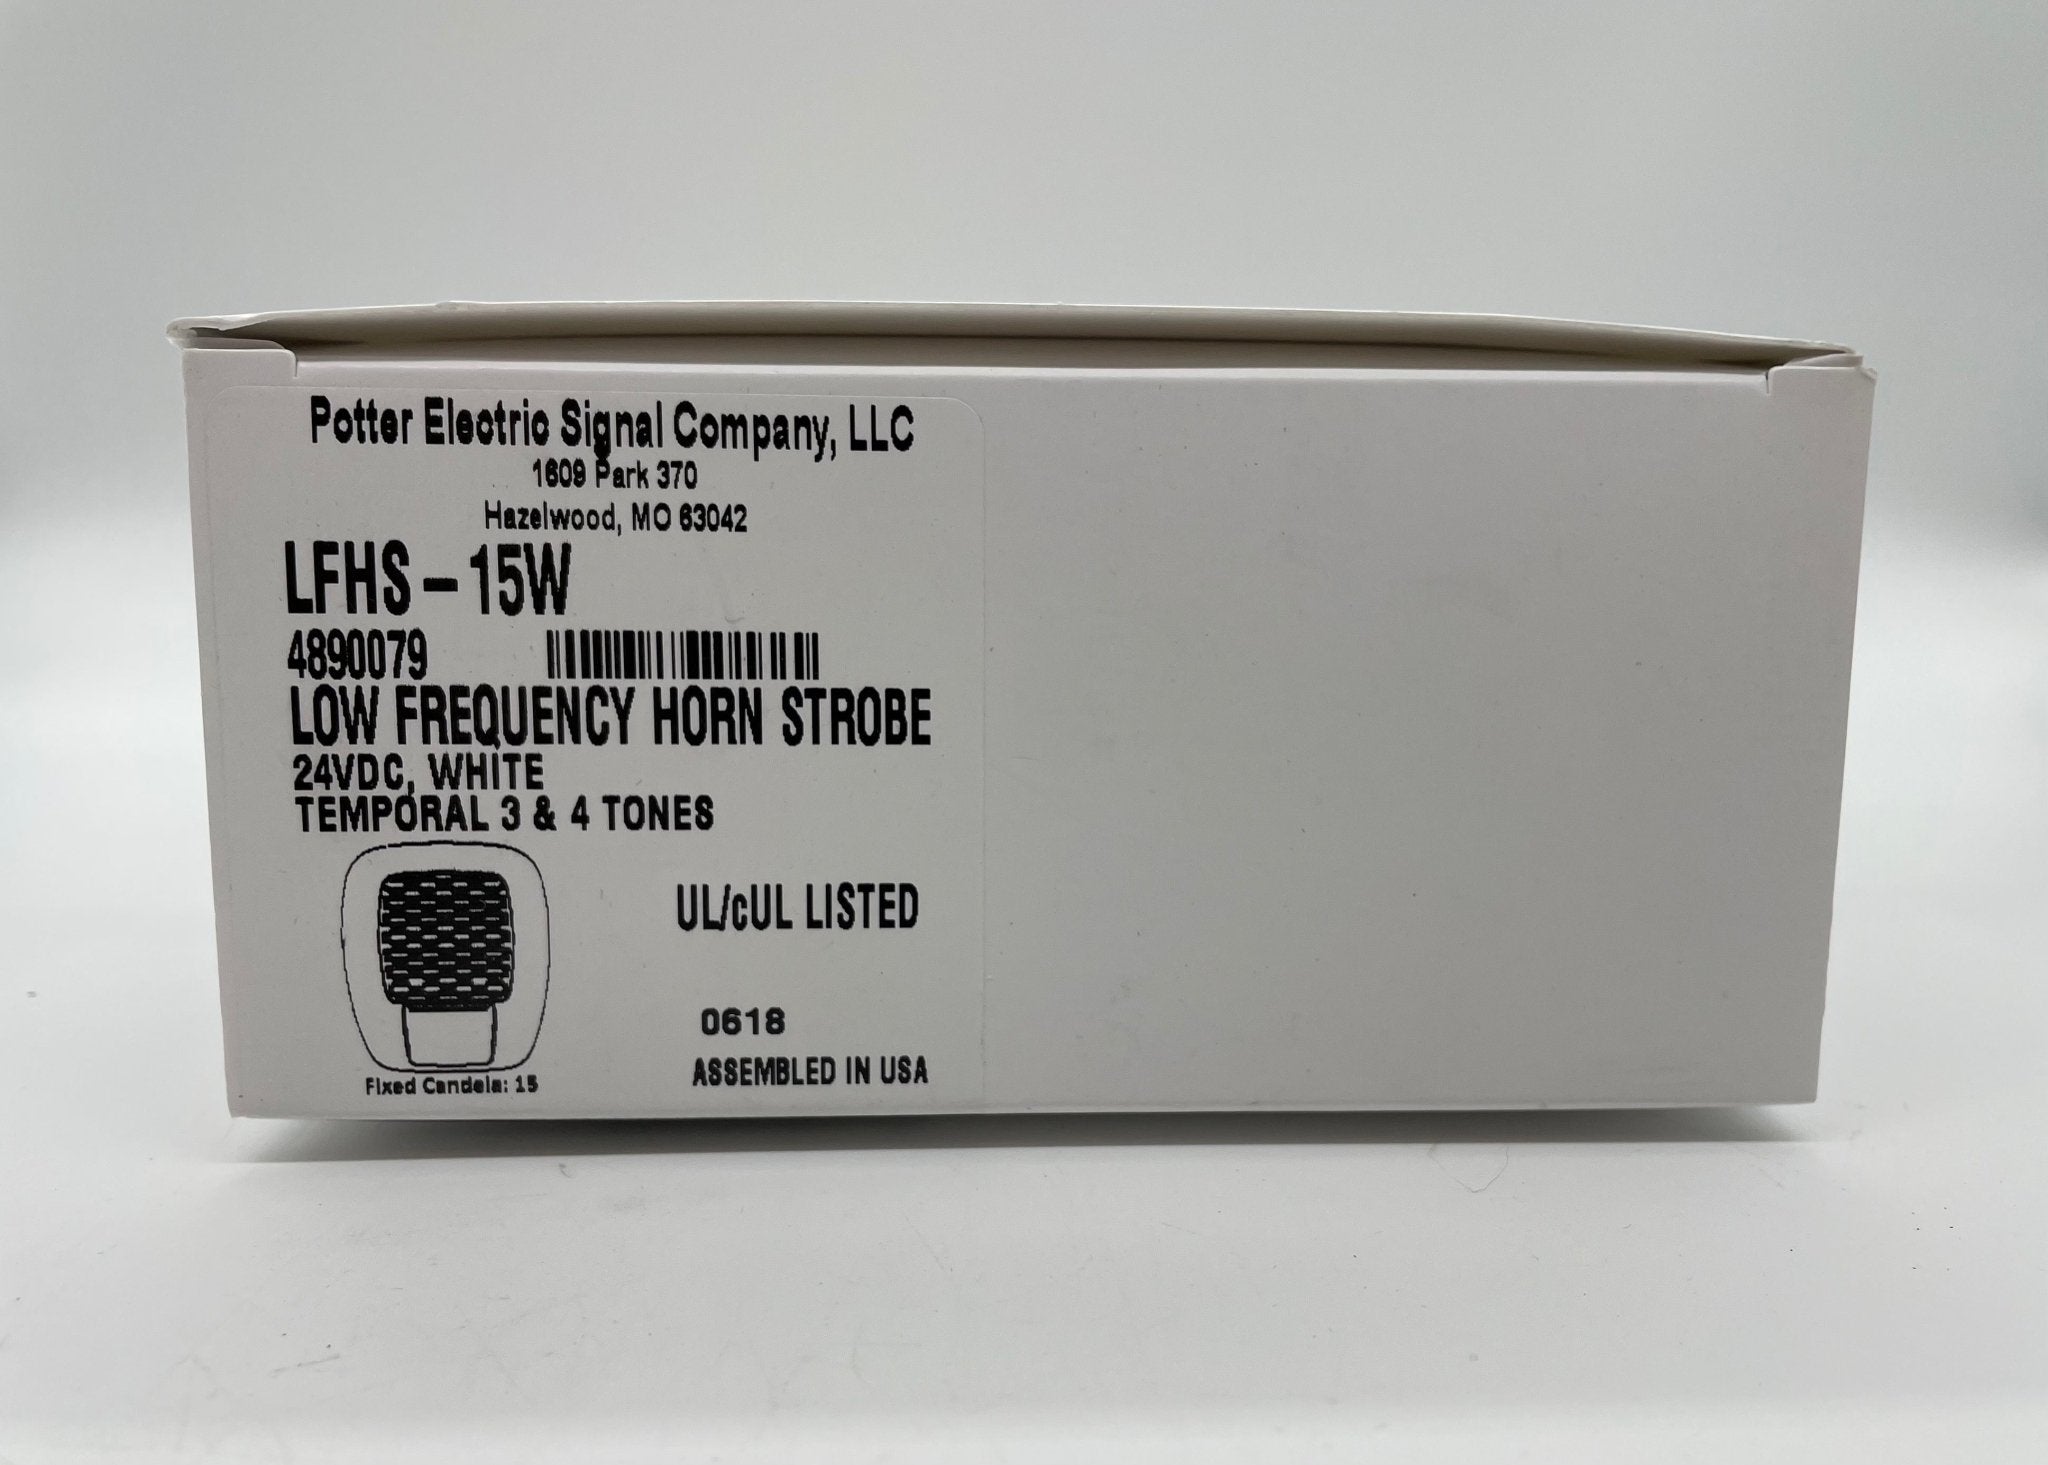 Potter LFHS-15W - The Fire Alarm Supplier